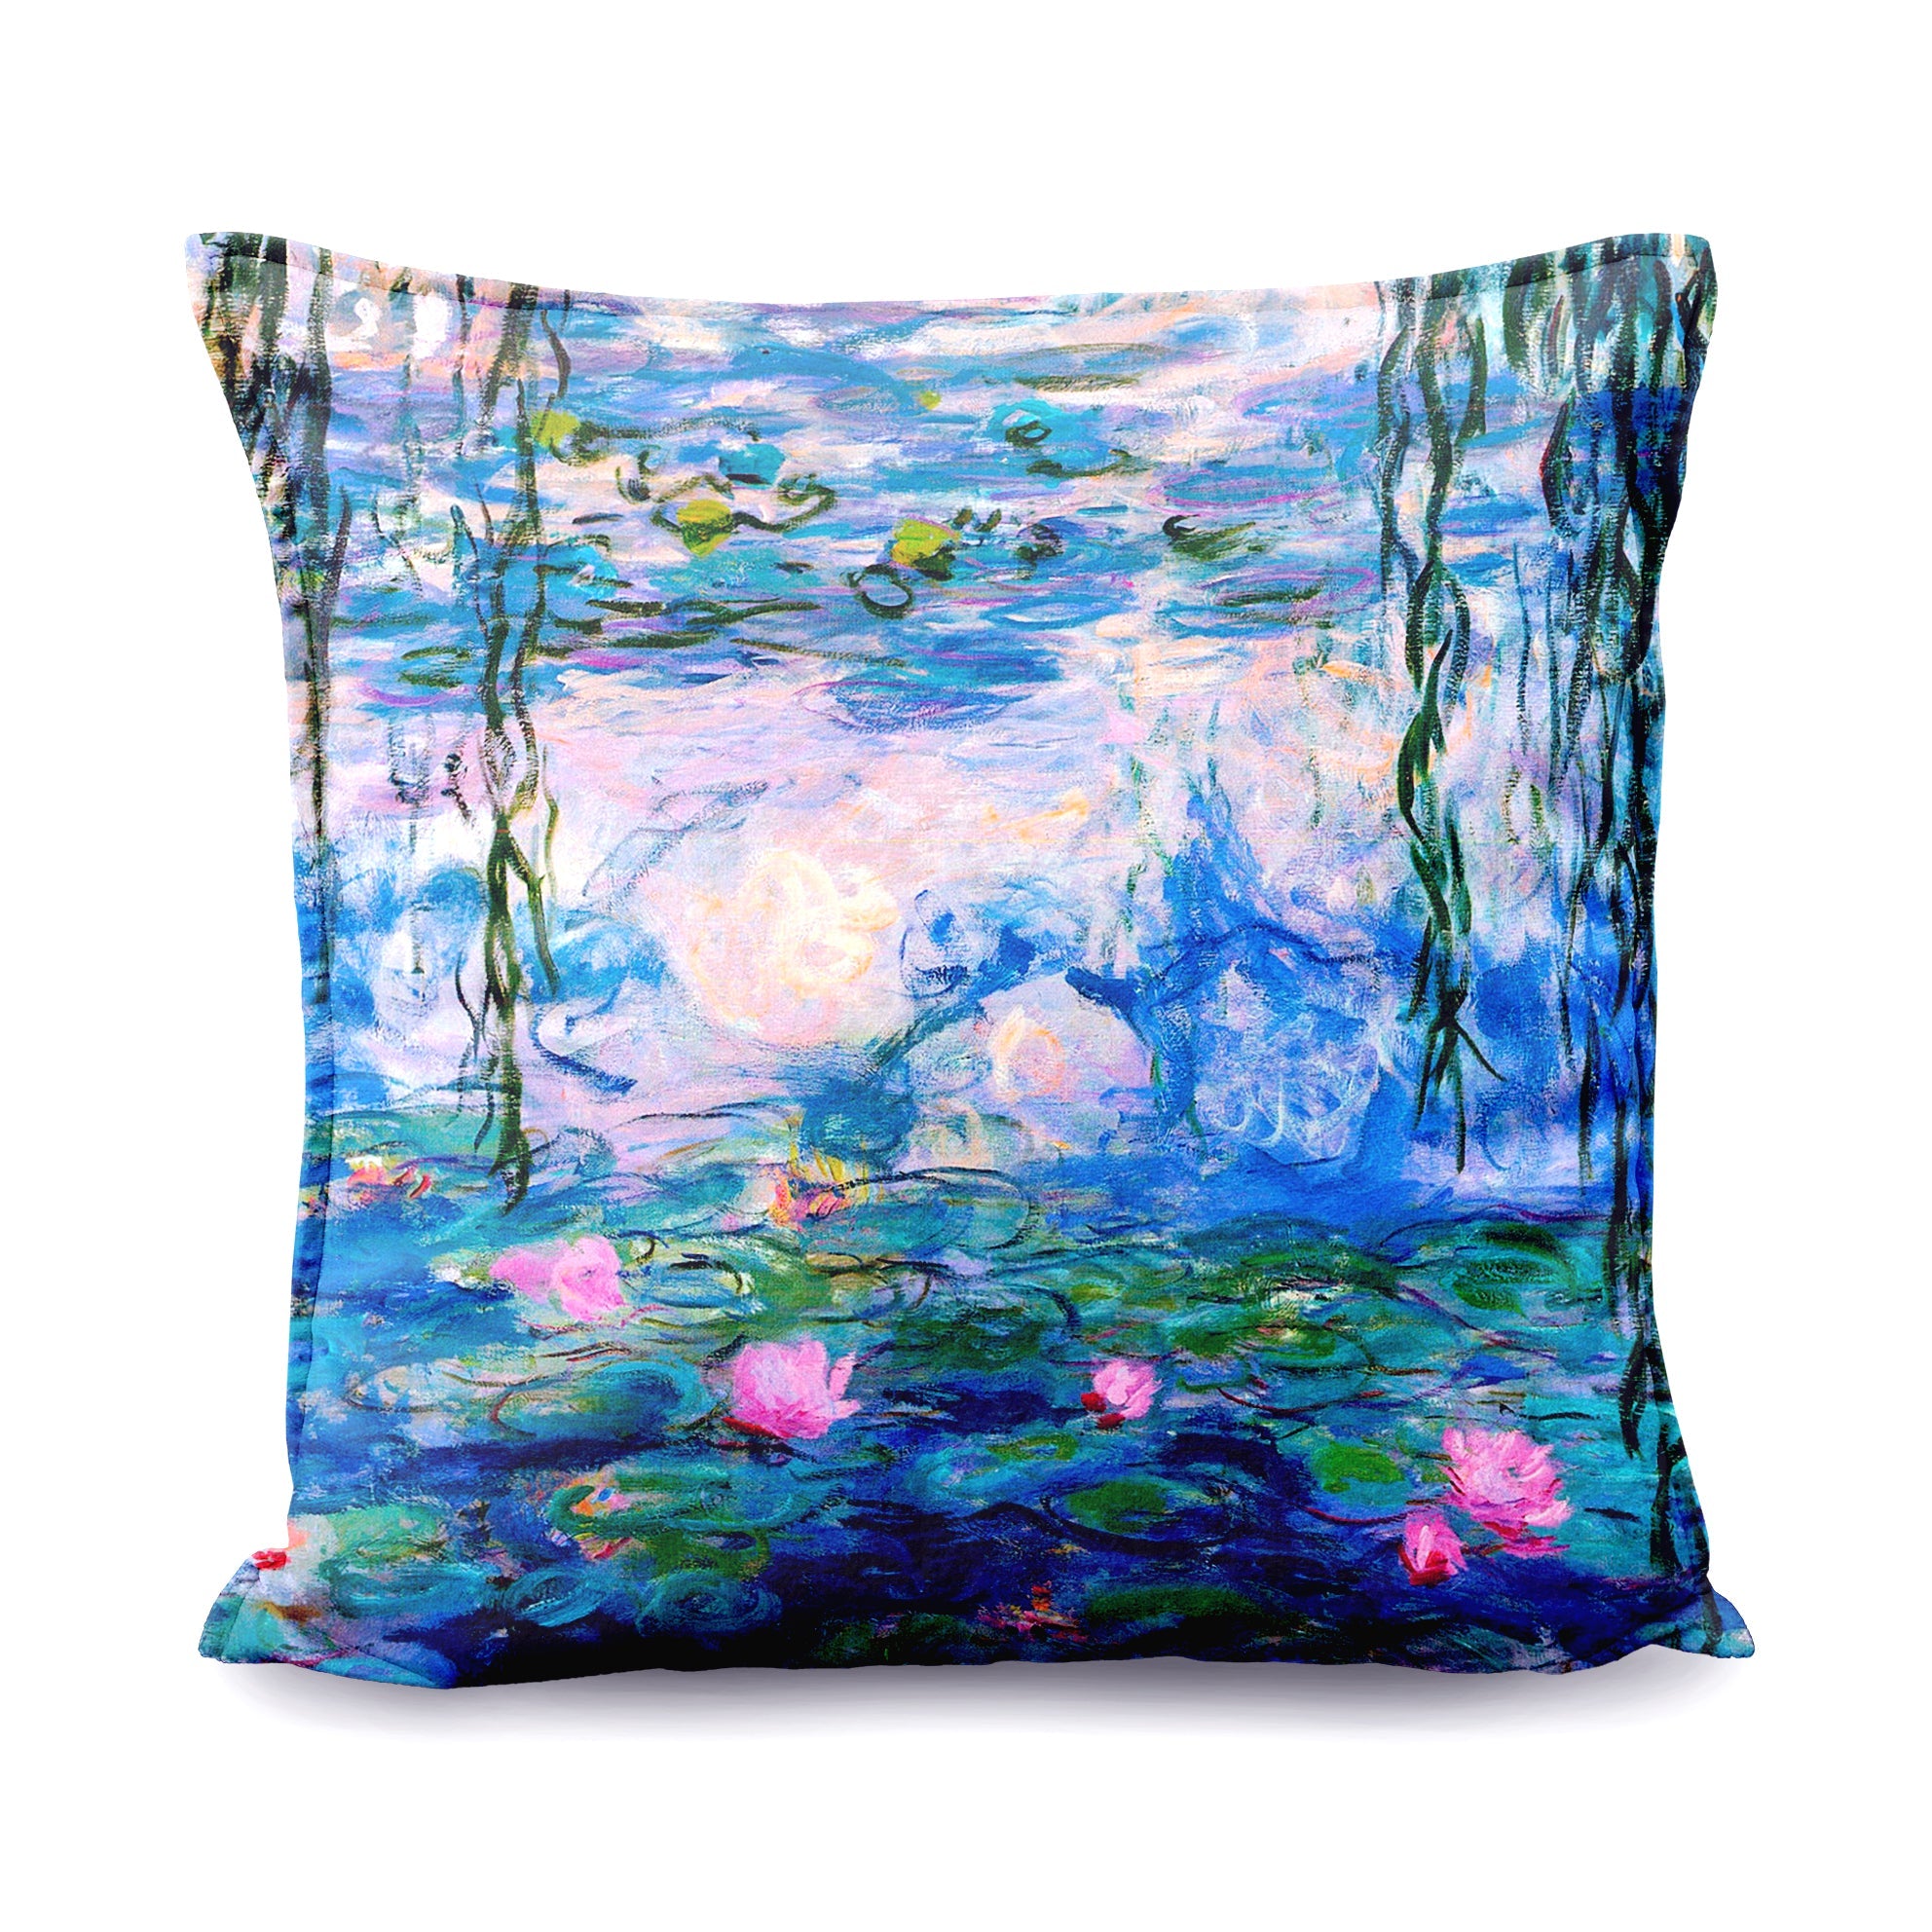 Decorative cushion Claude Monet "Water Lilies"